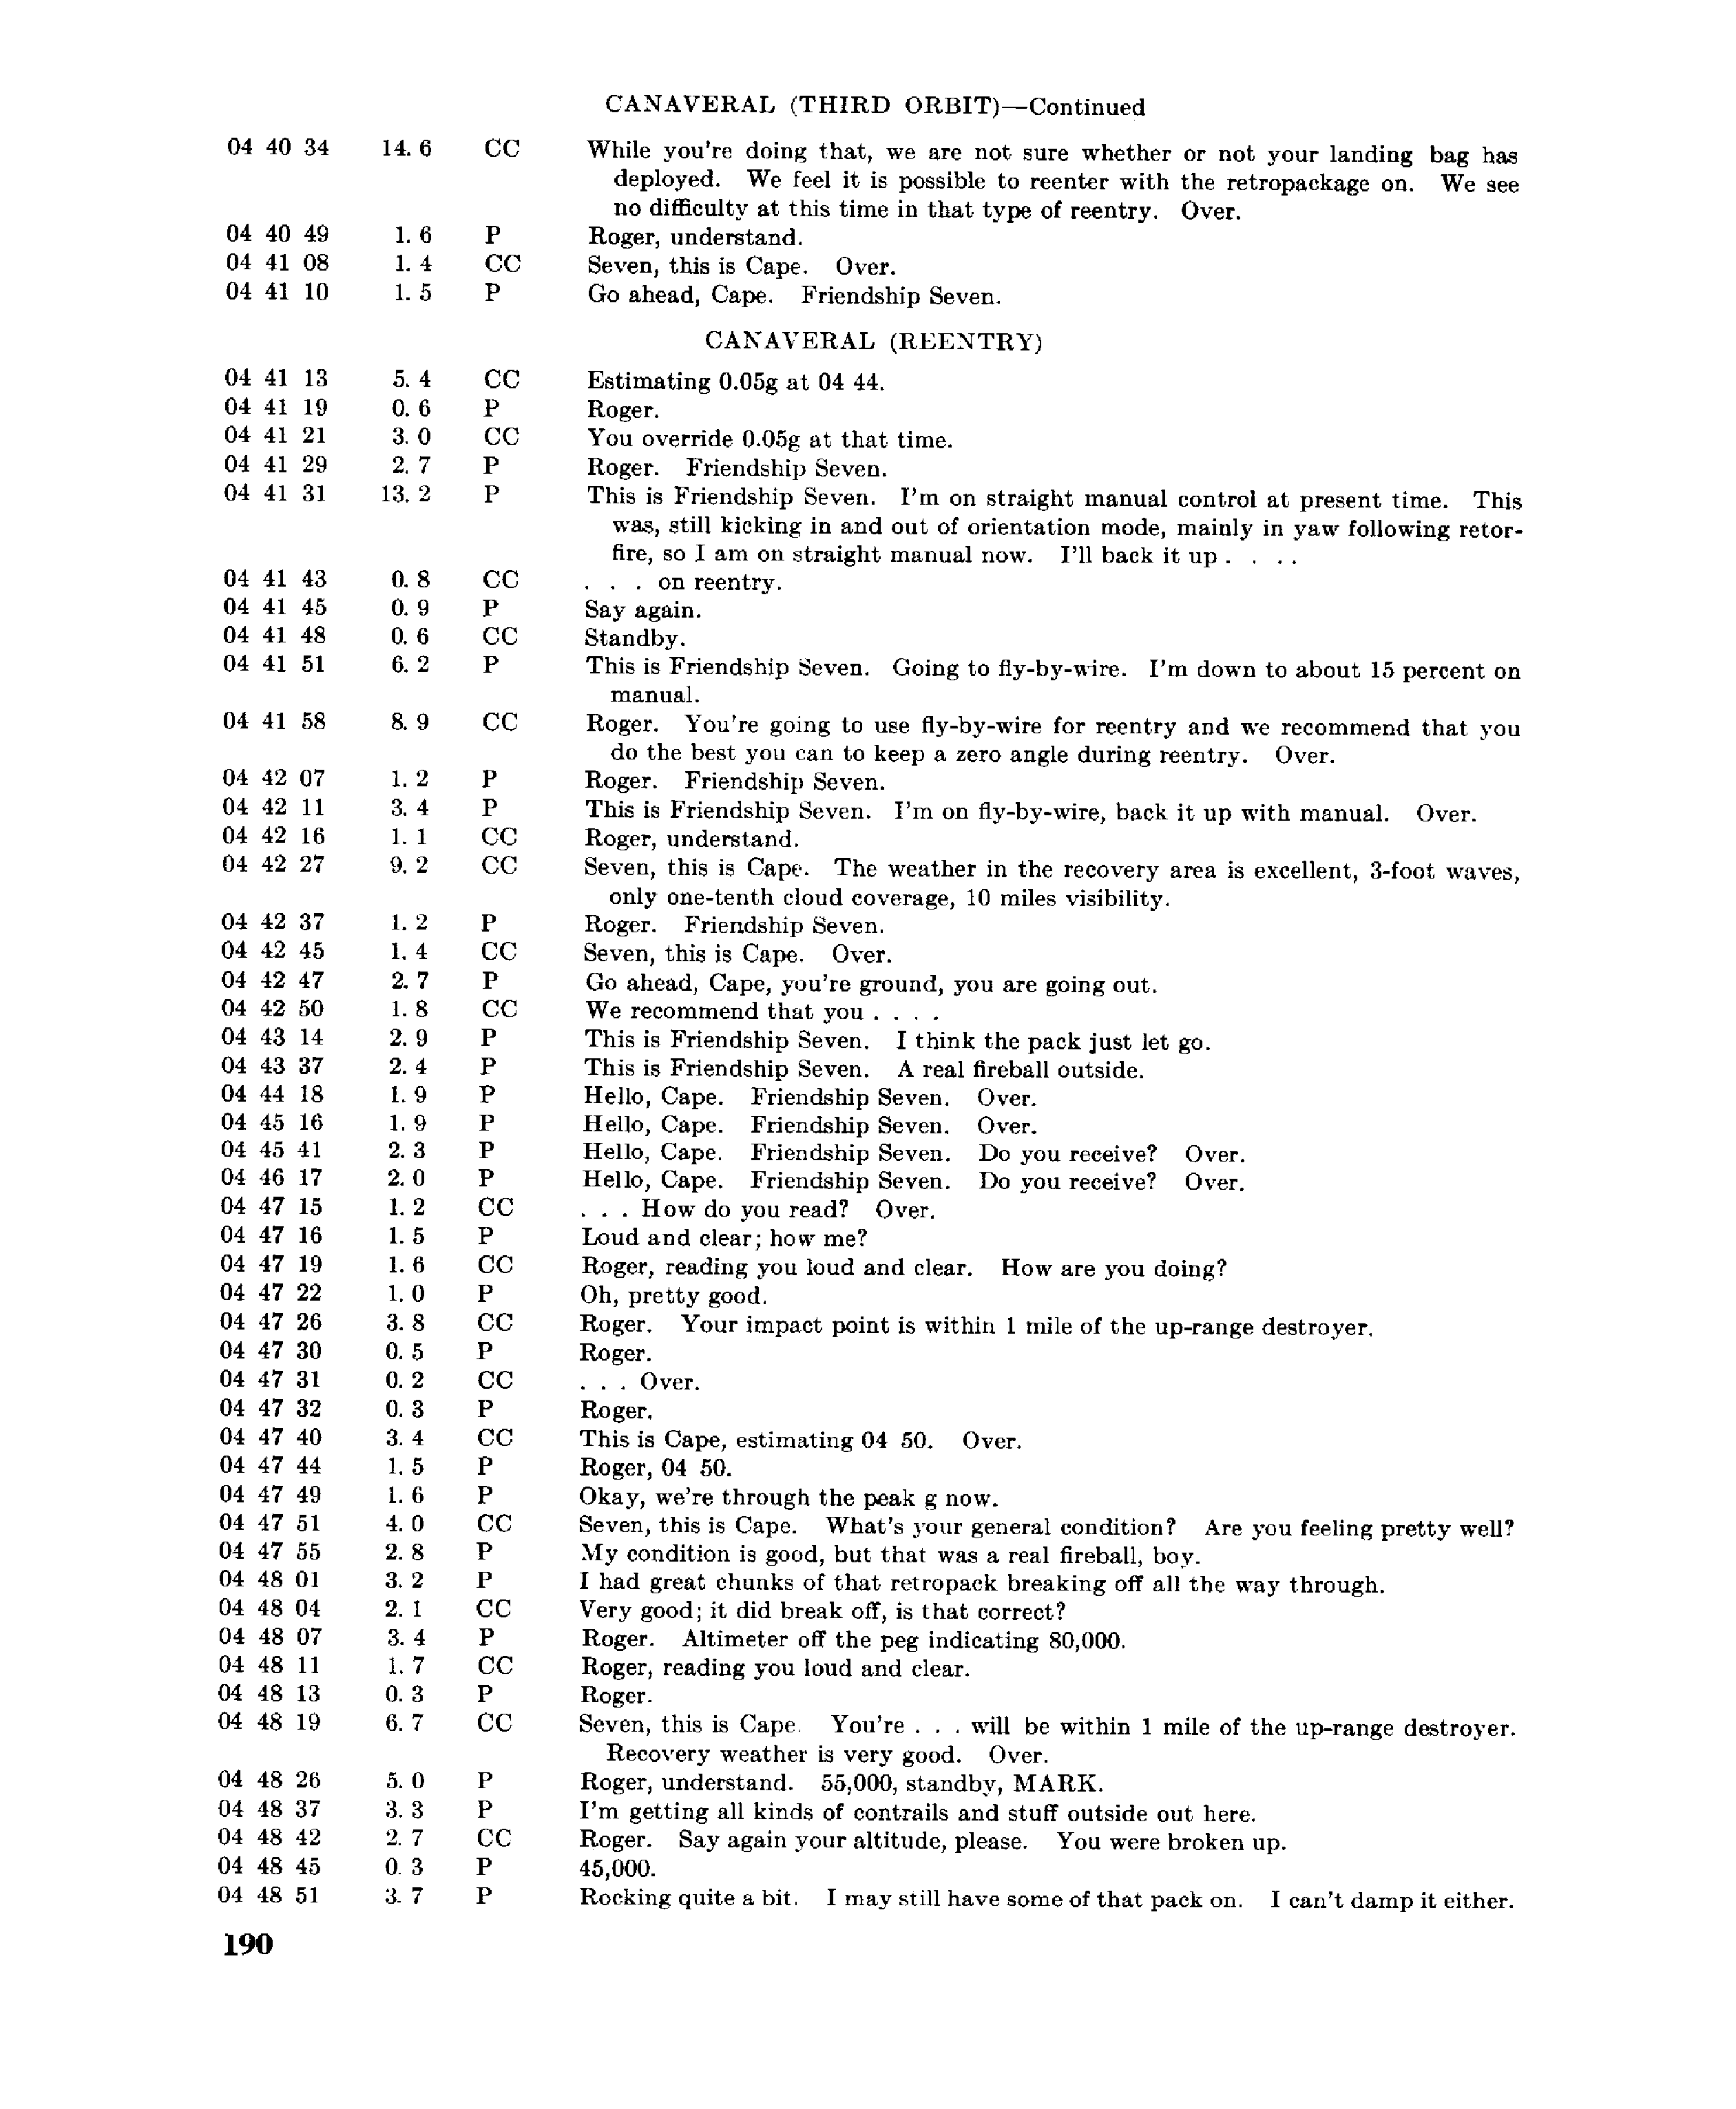 Page 189 of Mercury 6’s original transcript